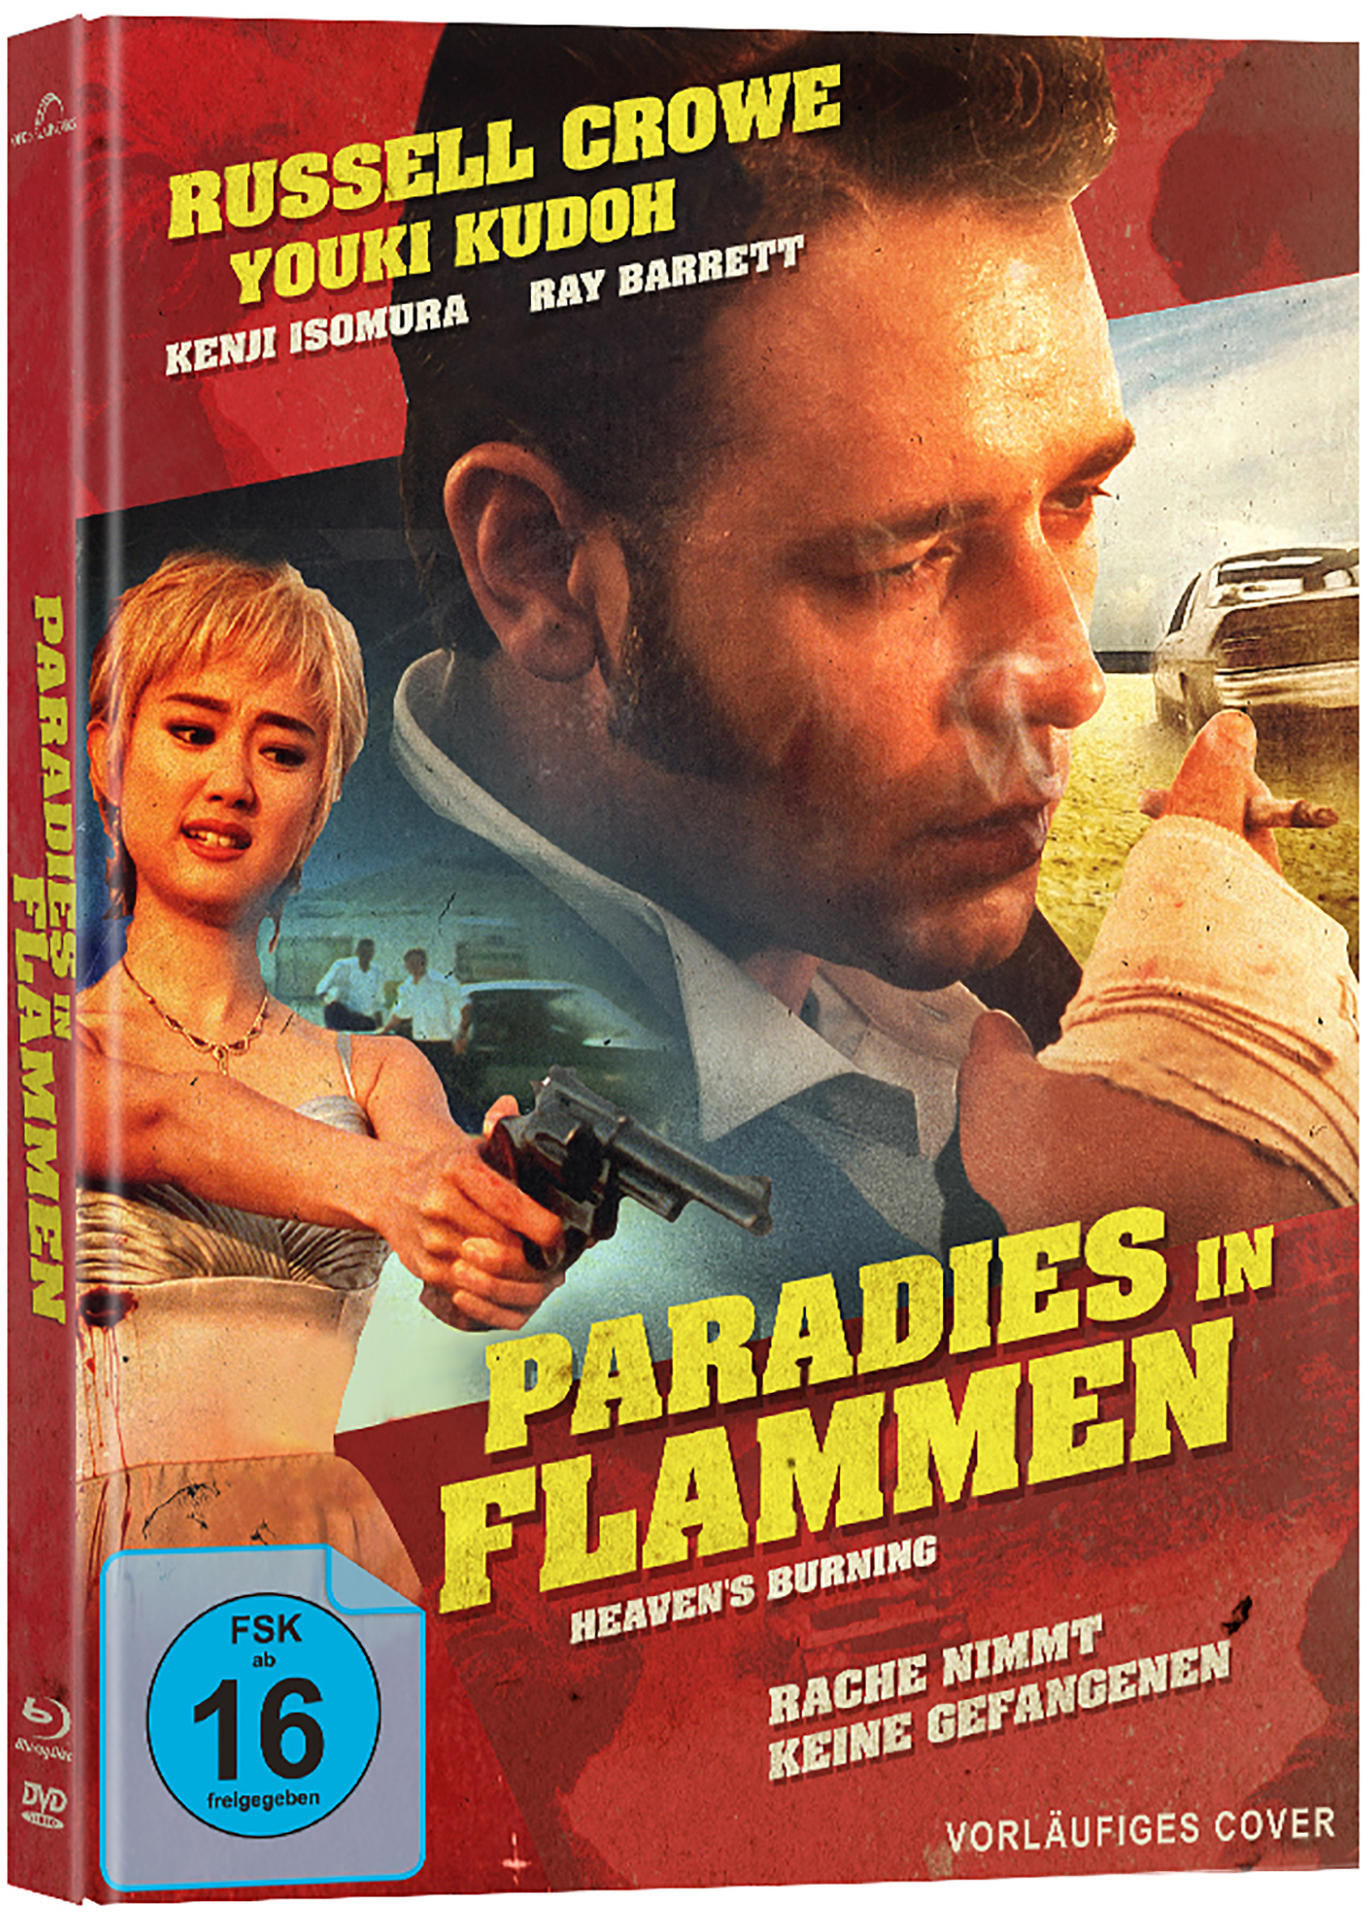 Blu-ray + Flammen DVD in Paradies